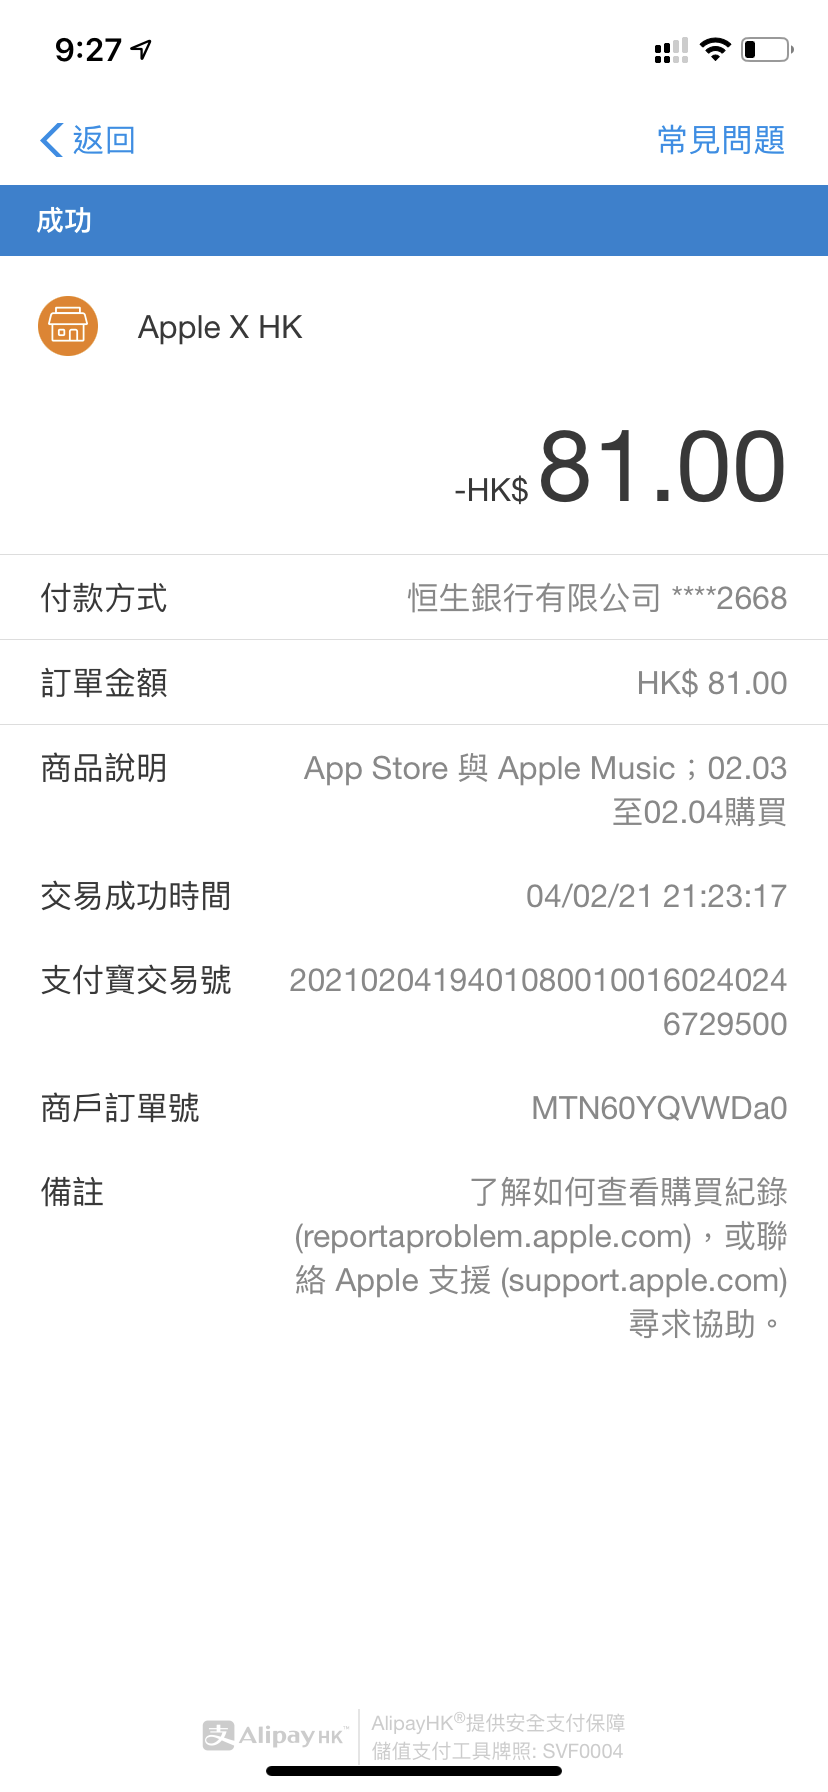 Invoice from Apple music - Apple Community